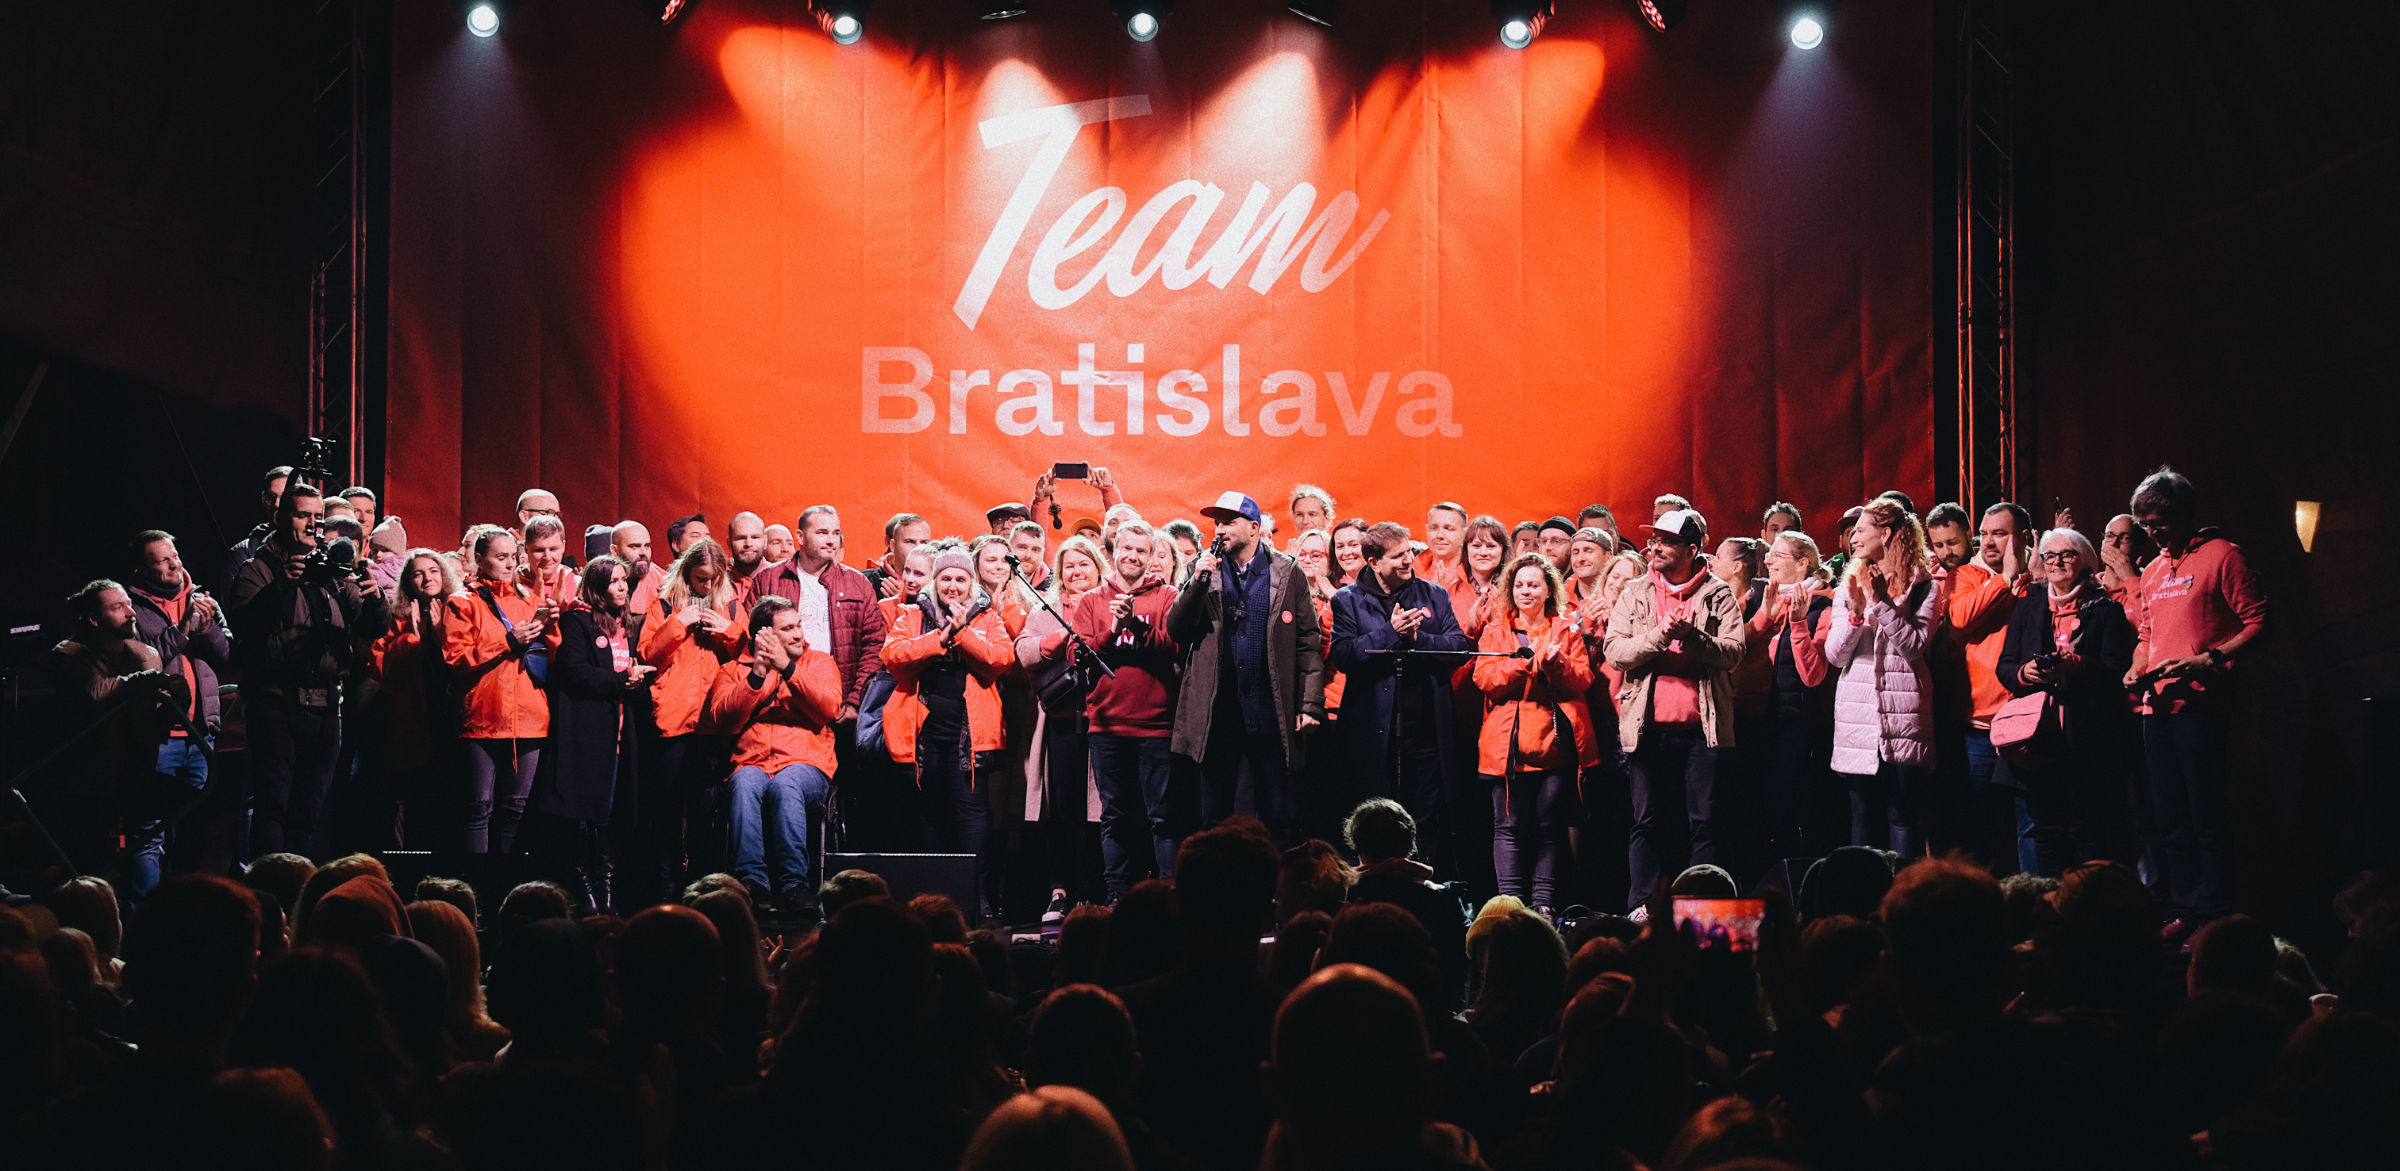 Team Bratislava